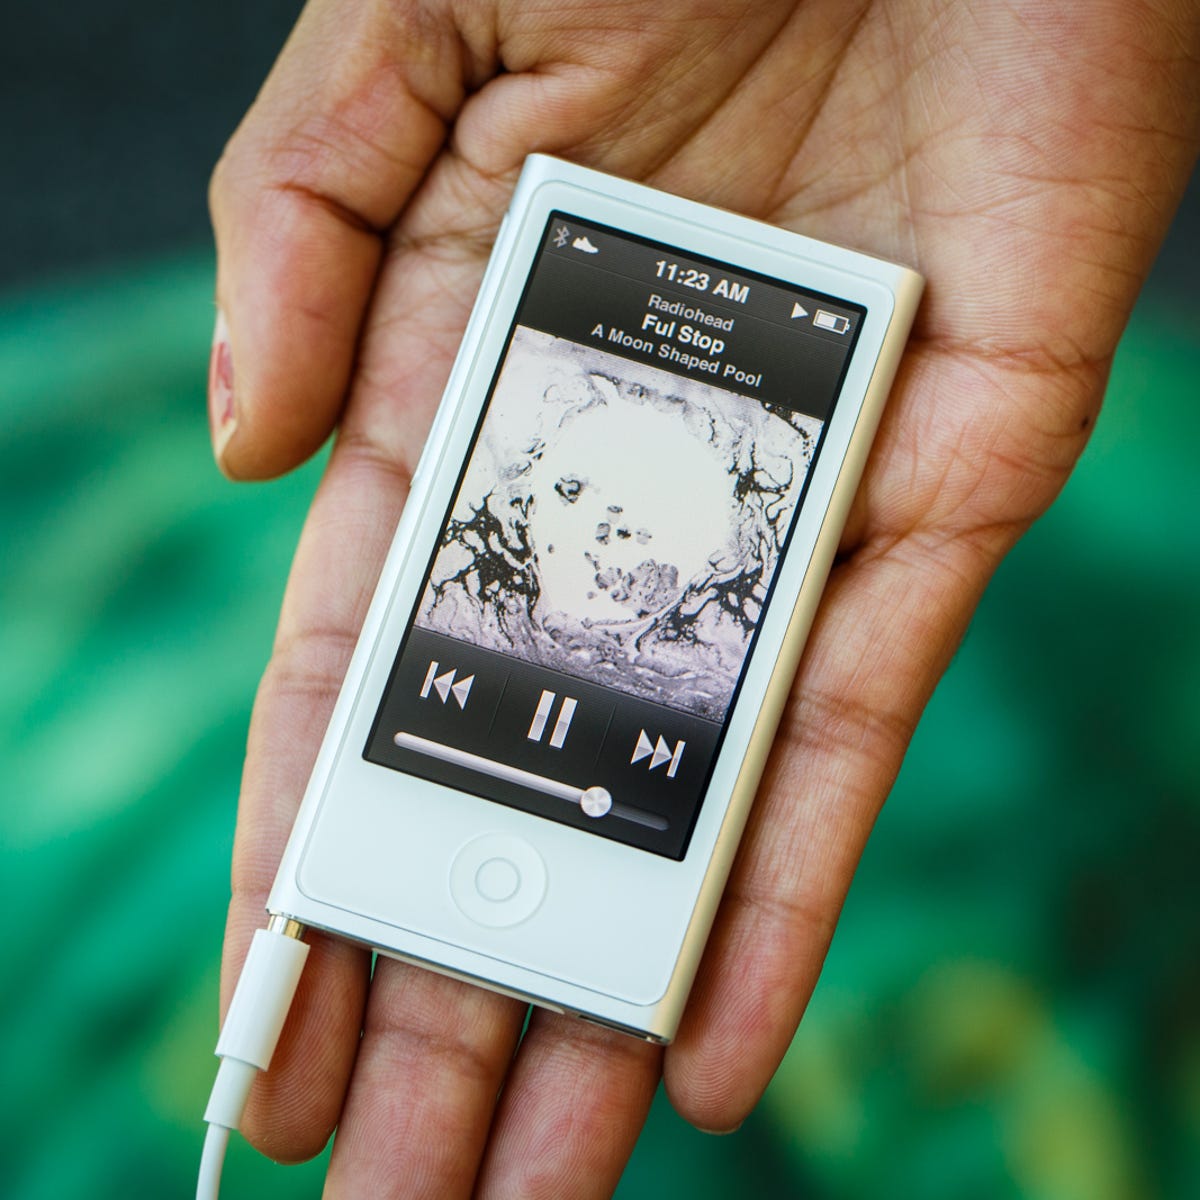 Apple iPod Nano review: iPod Nano falls short in of the smartphone - CNET